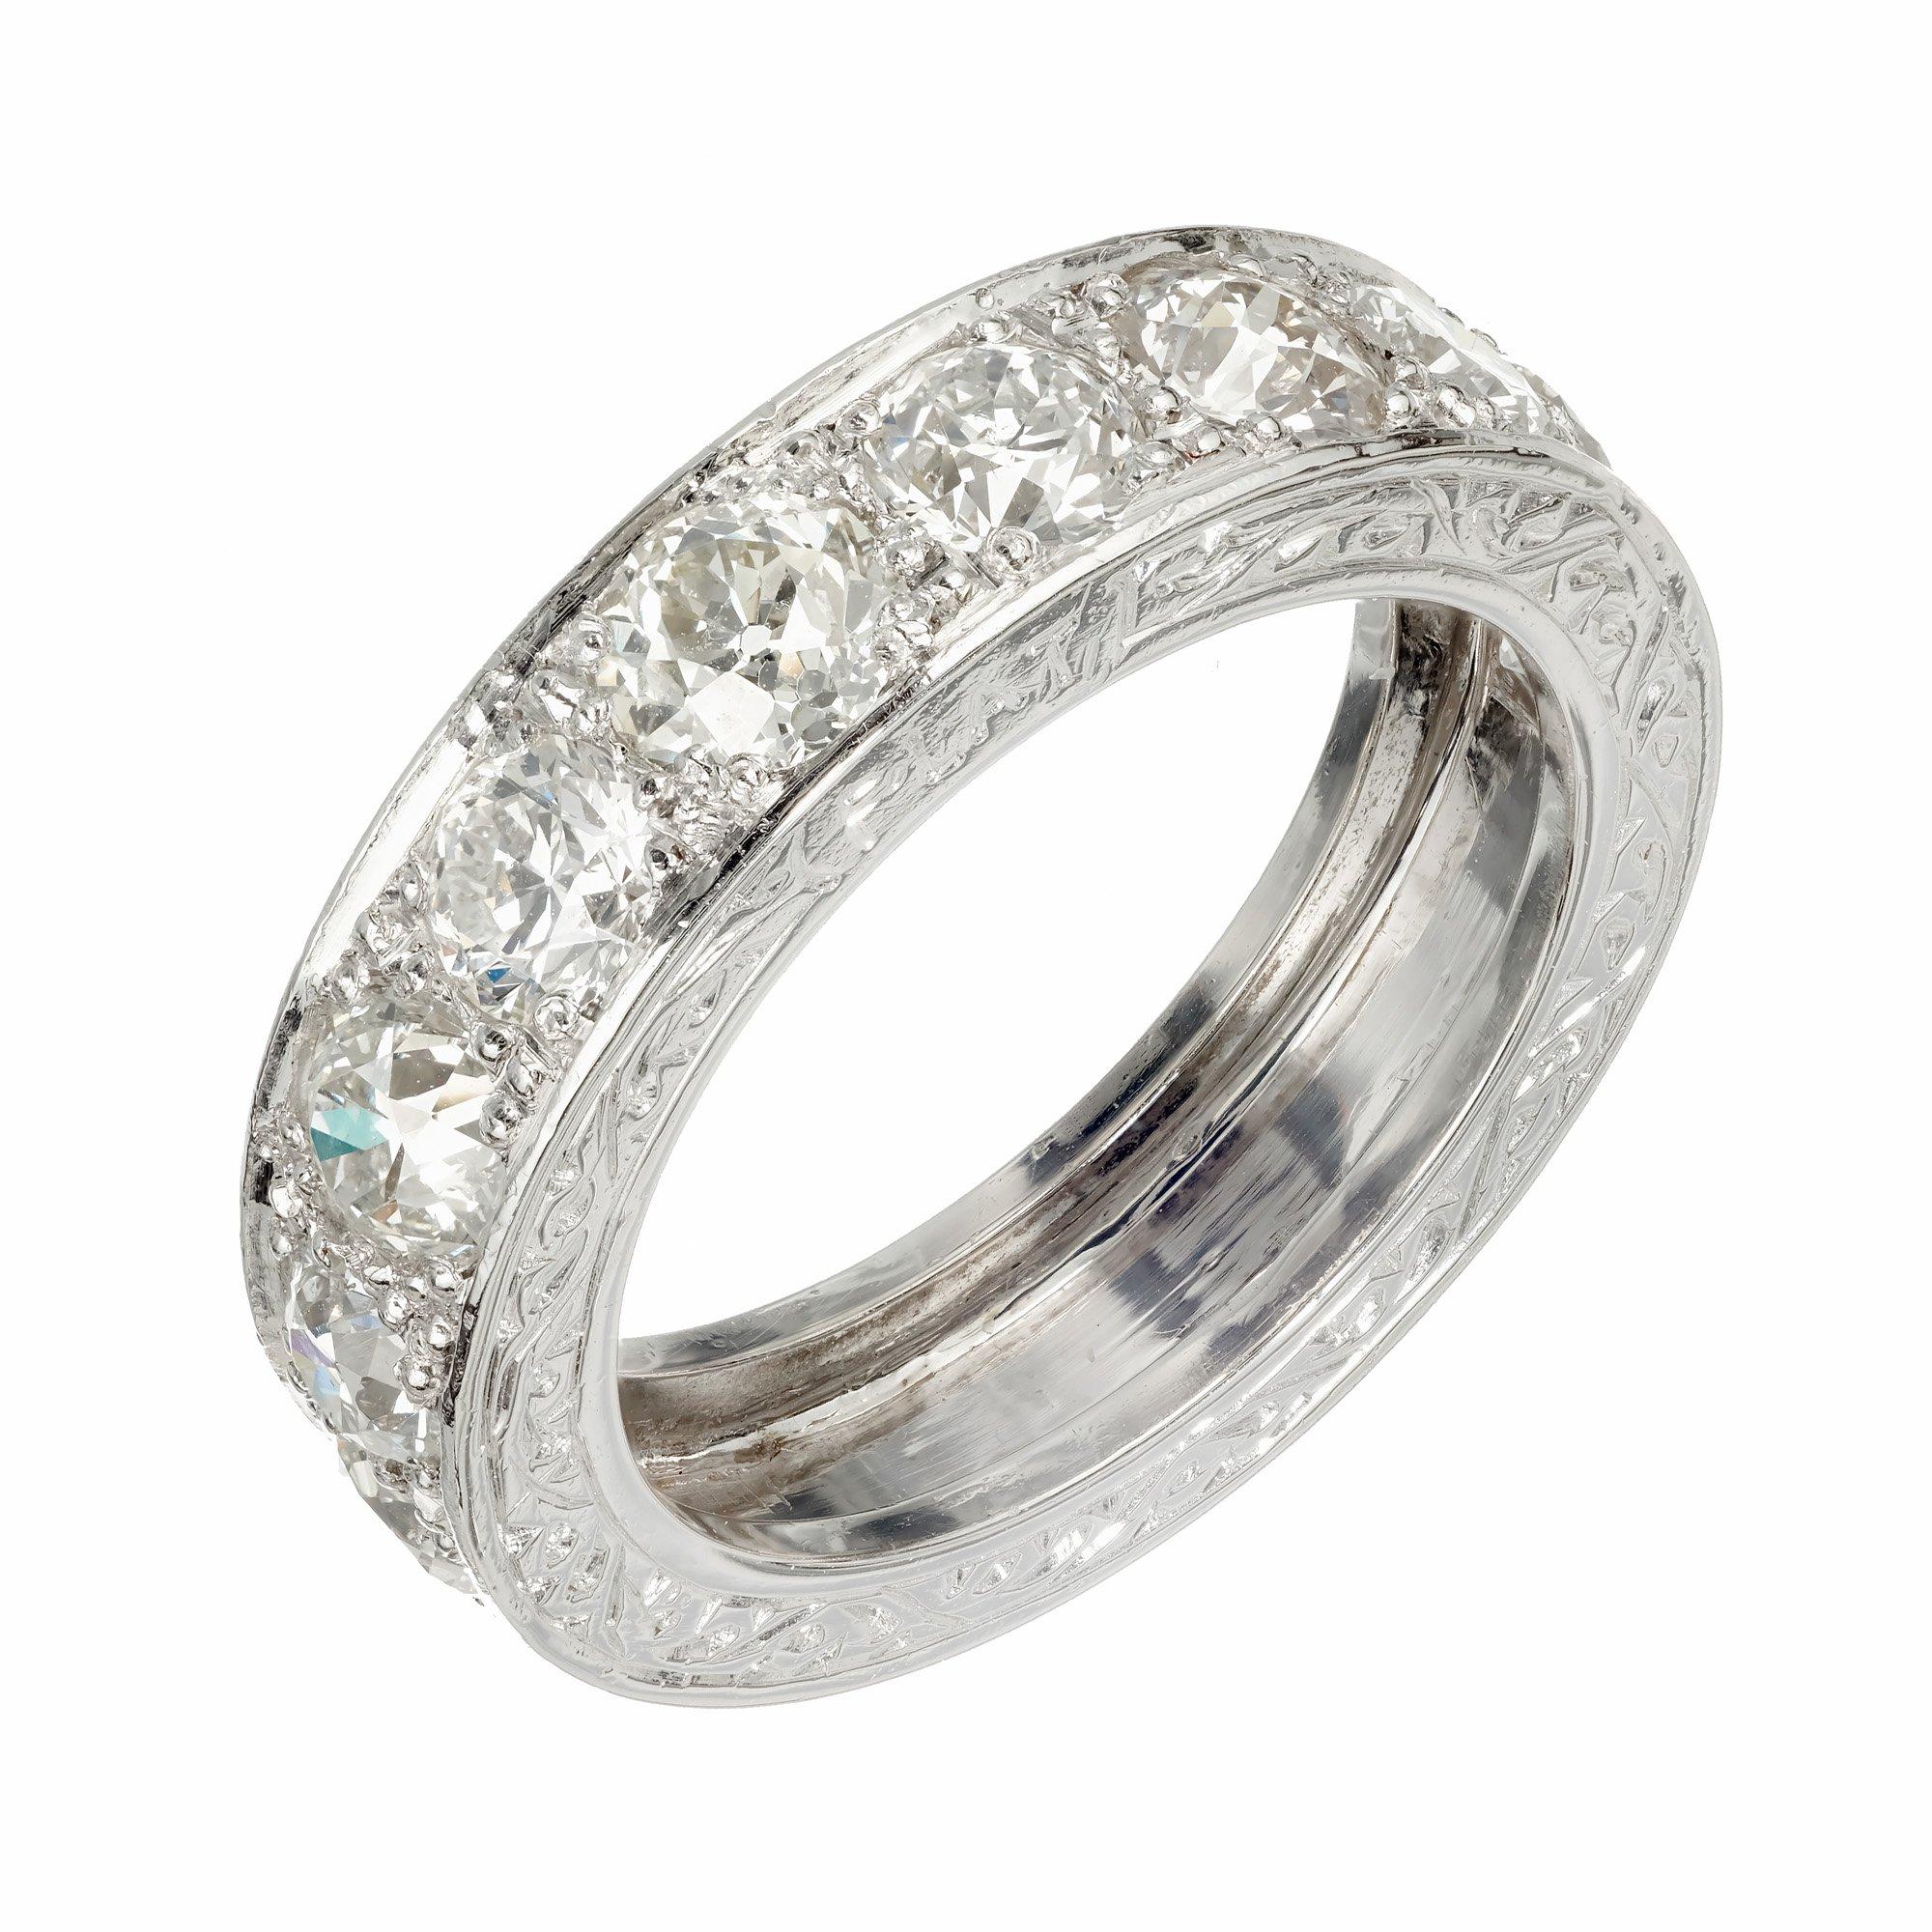 Peter Suchy 3.80 Carat Diamond Platinum Wedding Band Ring